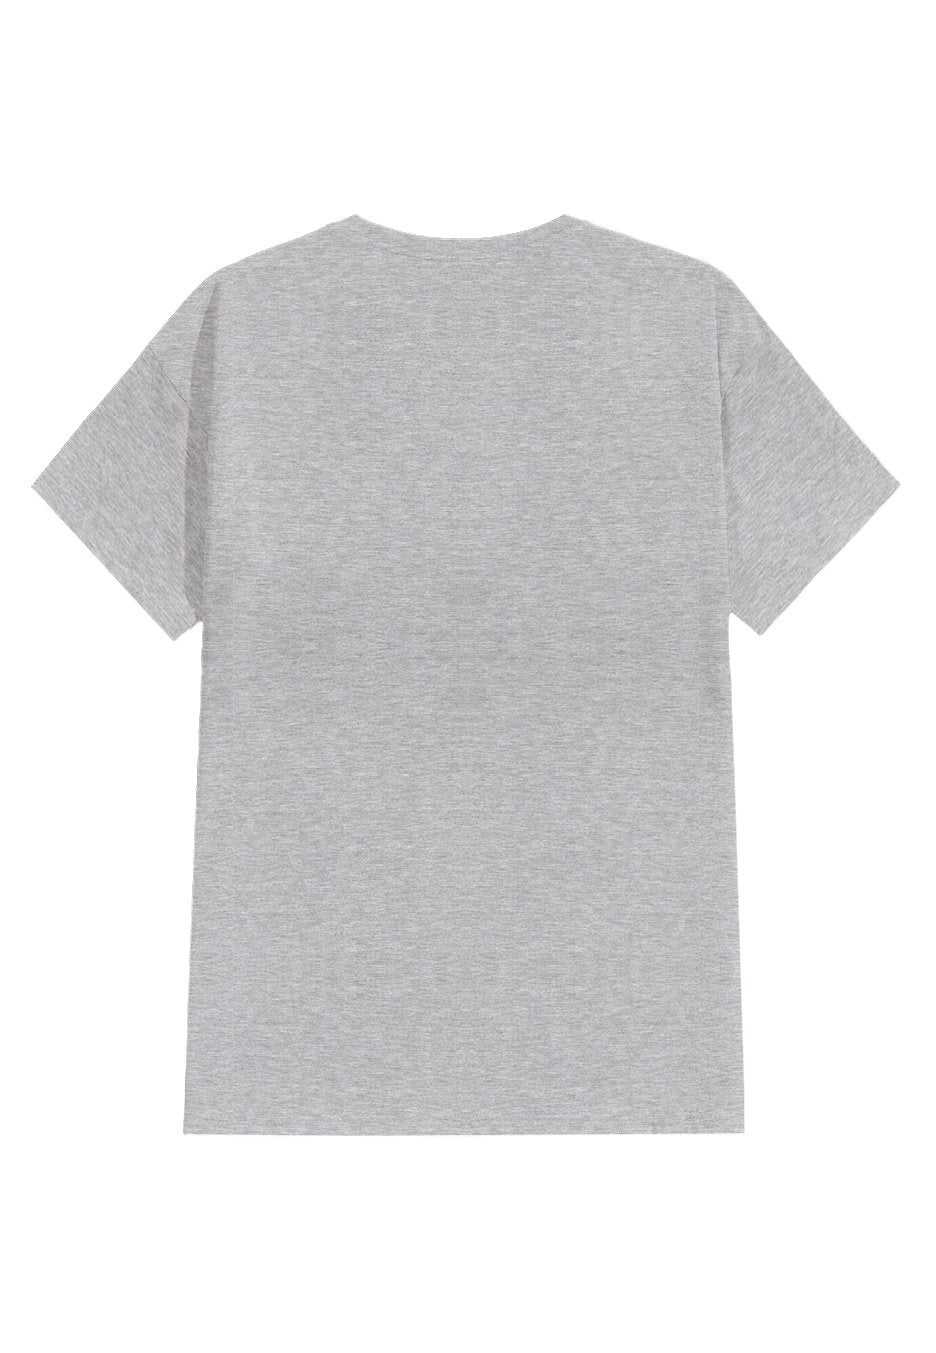 Soundgarden - Badmotorfinger V.1 Grey - T-Shirt